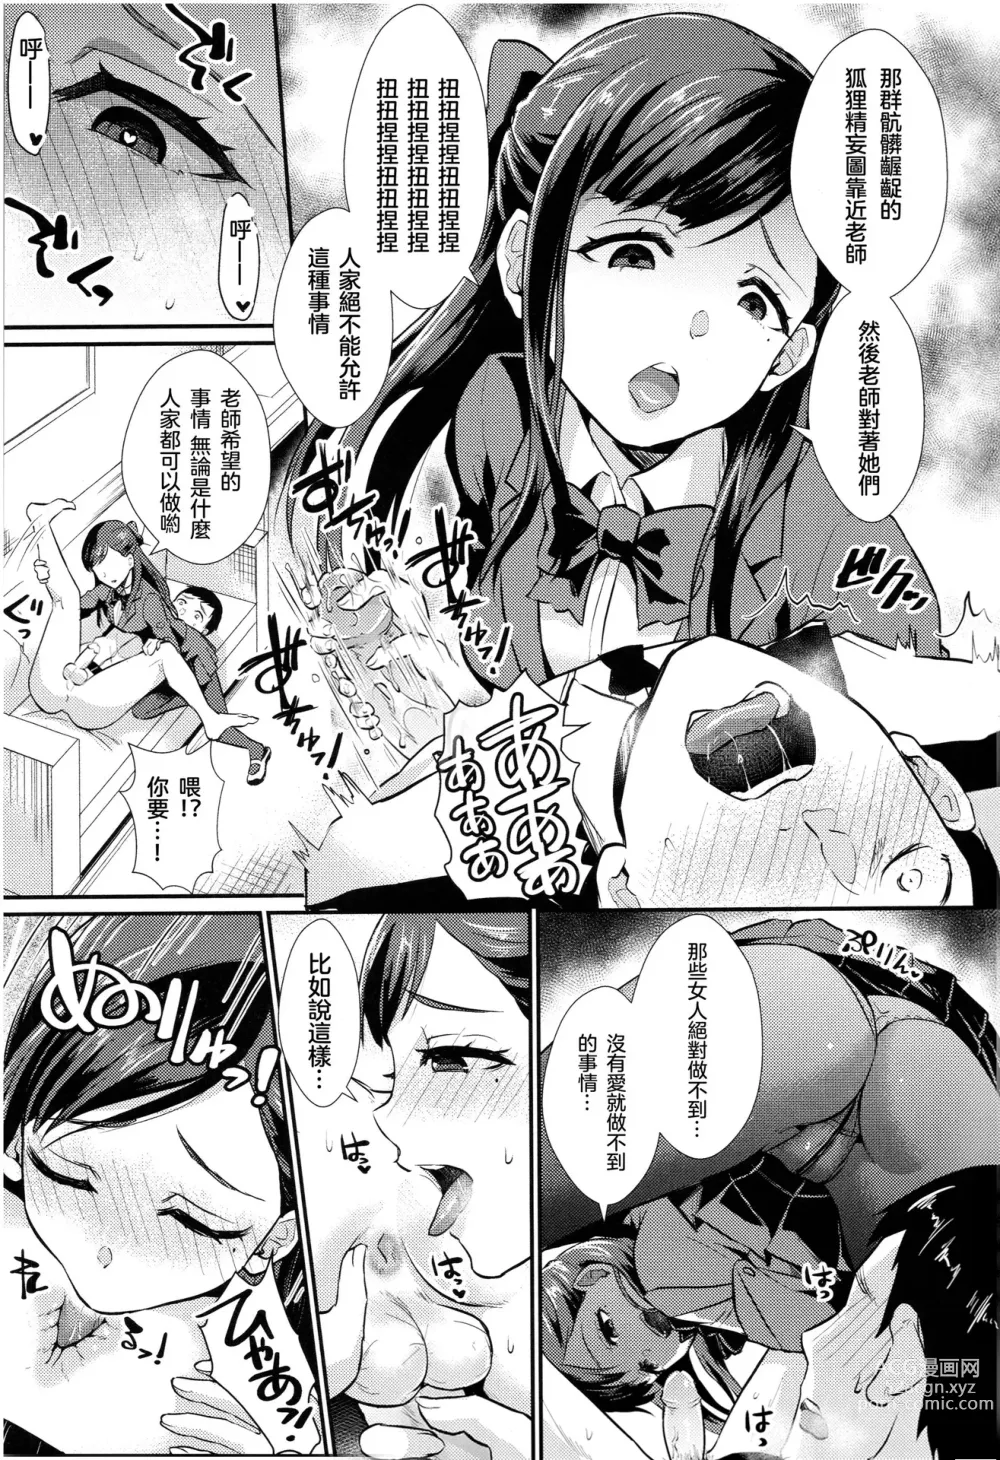 Page 174 of manga Otome Initiative - Girls Initiative (uncensored)